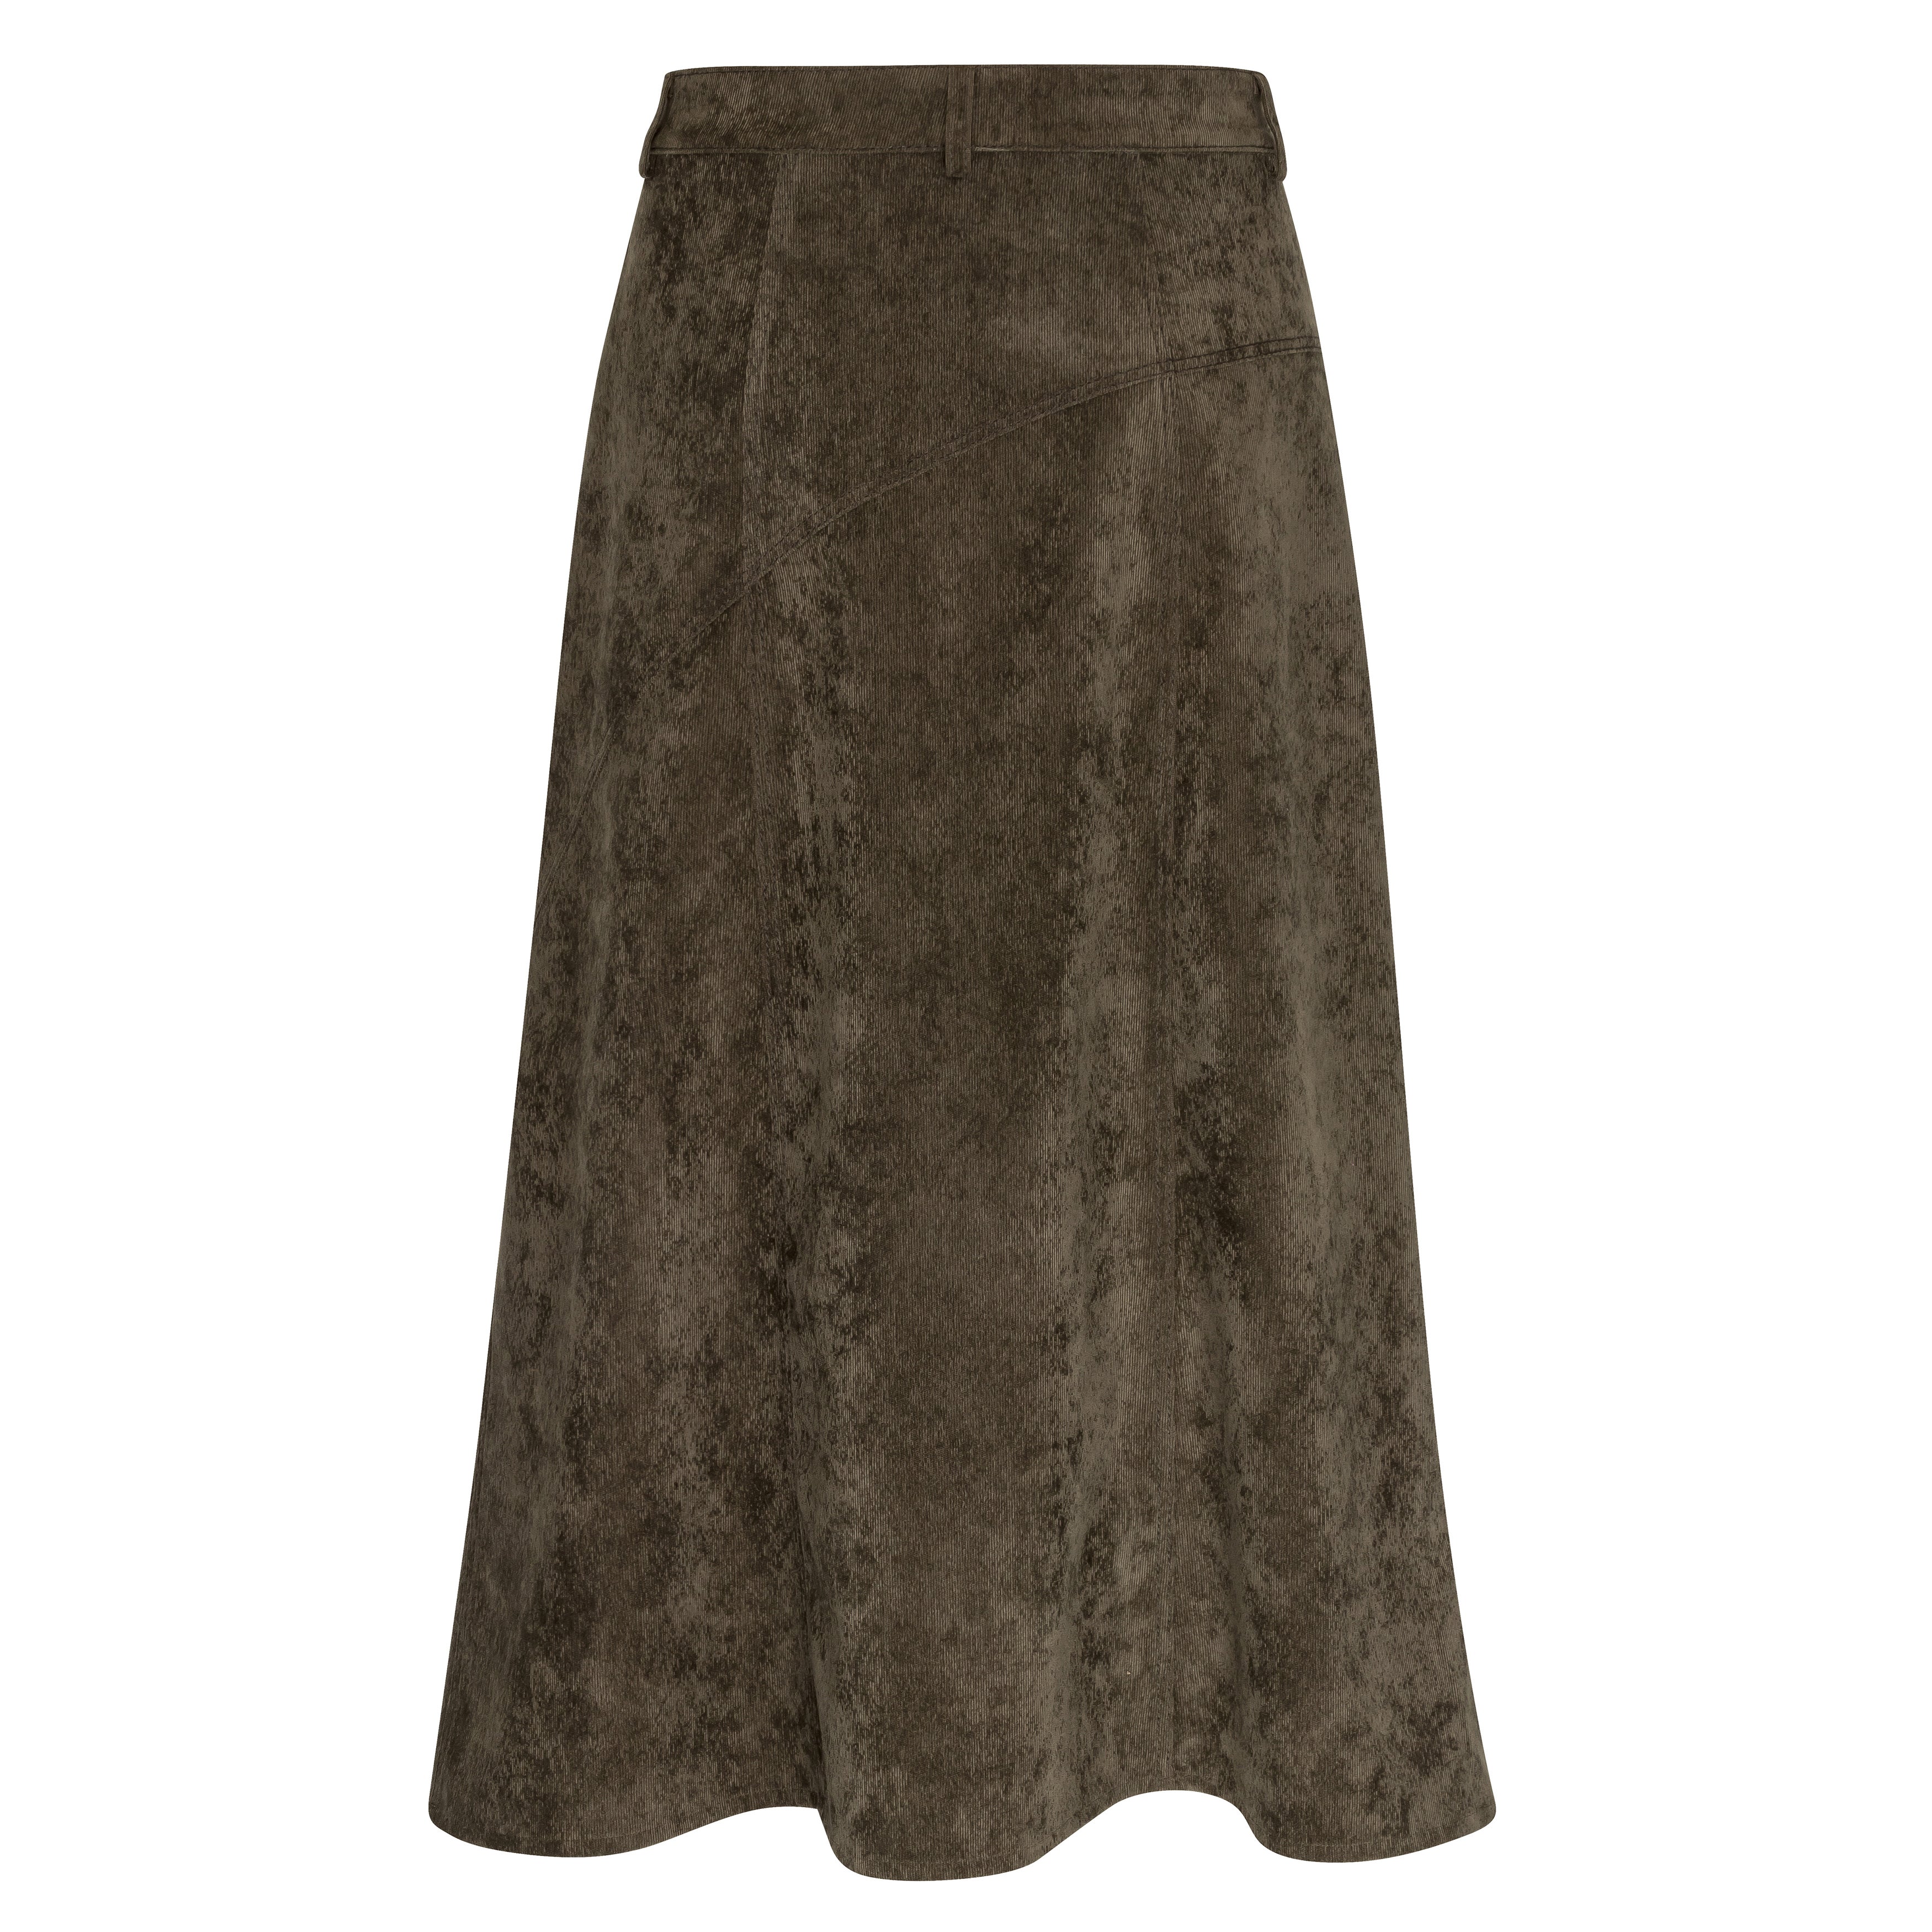 Cord skirt with sloping yoke